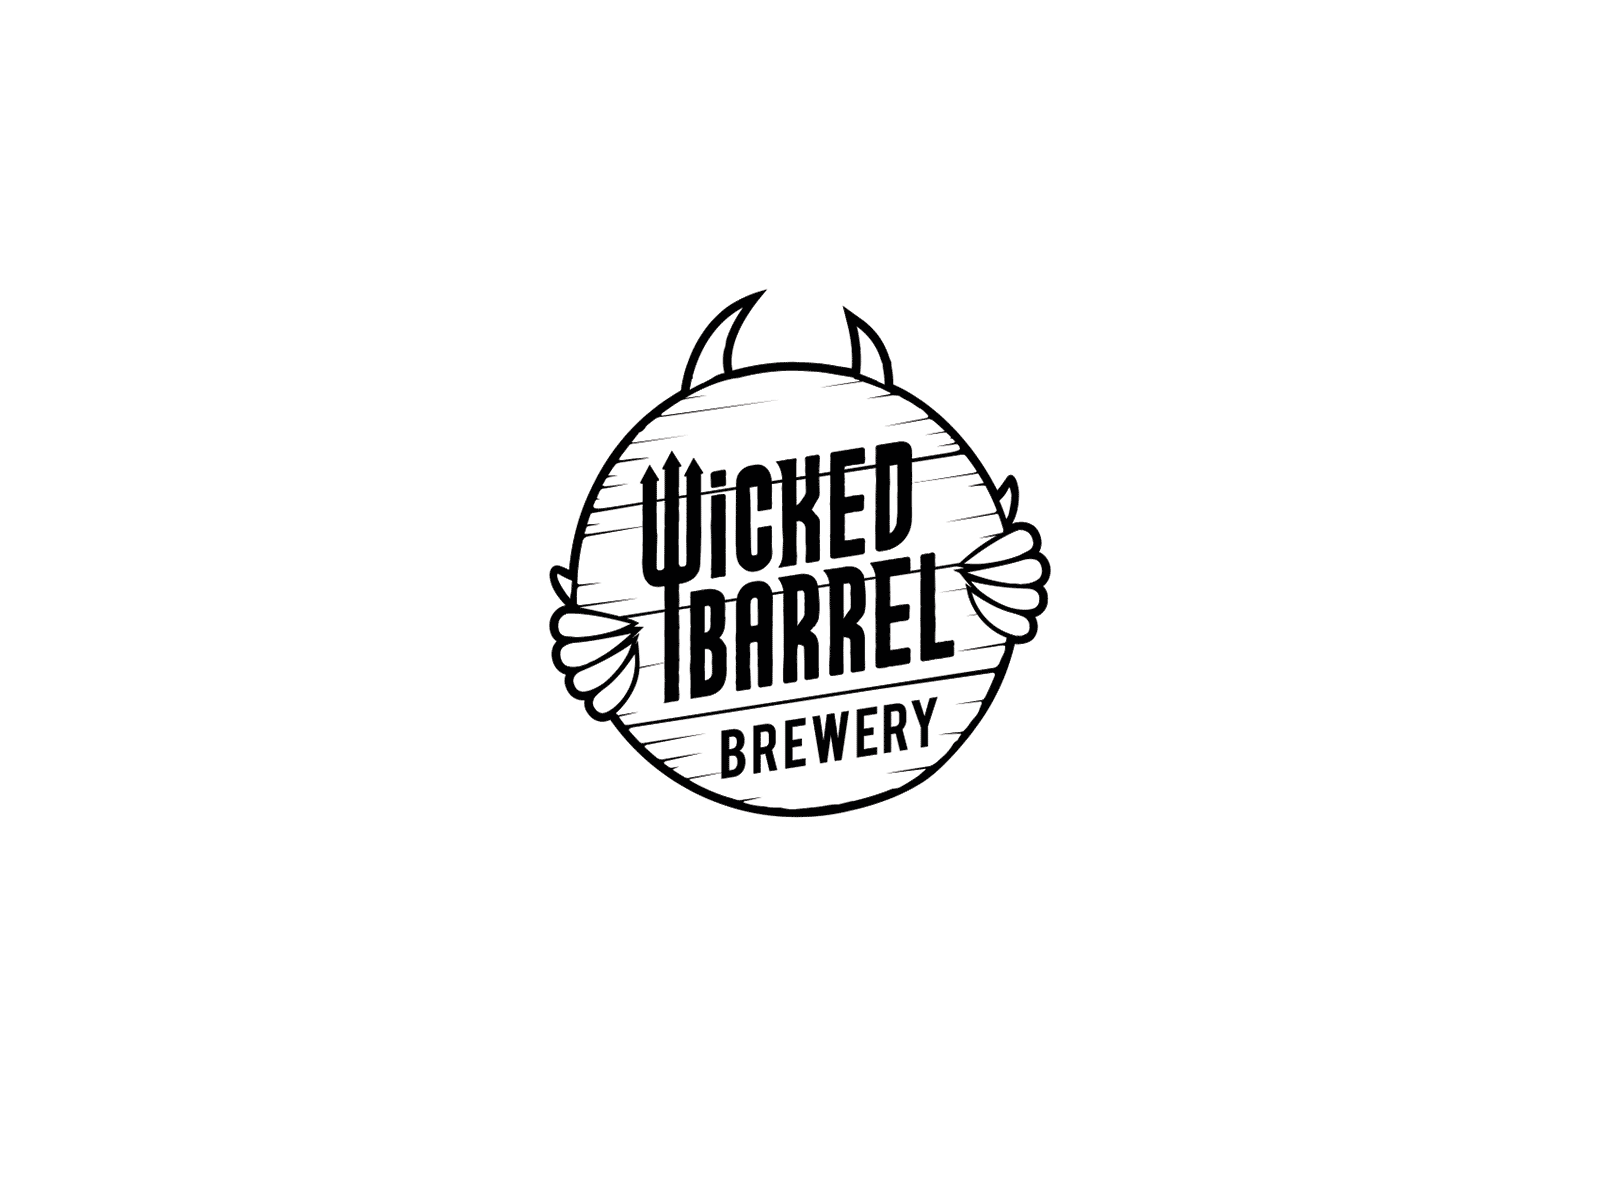 Wicked Barrel Brewery brand identity branding identity illustration logo logo design logotype packaging typography wordmark